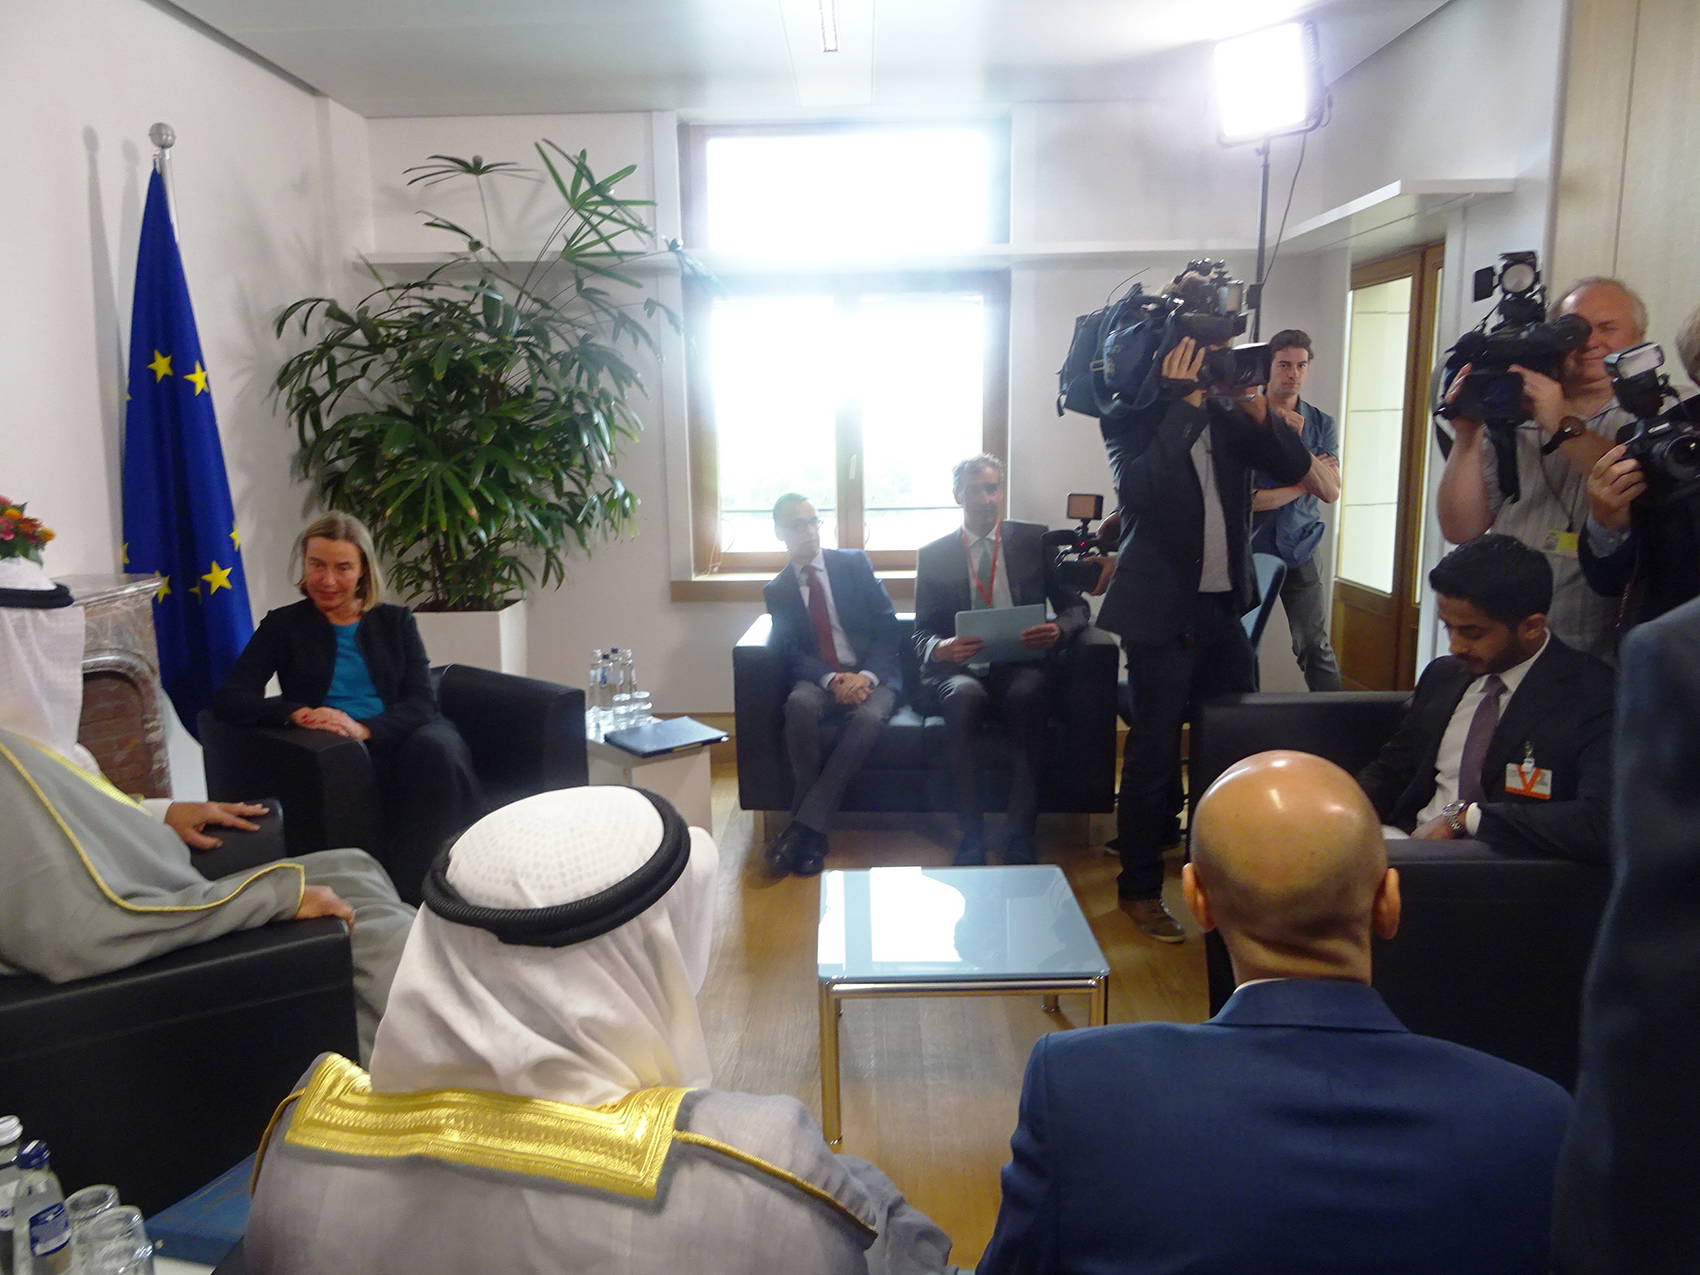 Sheikh Sabah Khaled Al-Hamad Al-Sabah, Kuwait's Deputy Prime Minister and Minister of Foreign Affairs meets with EU High Representative Federica Mogherini